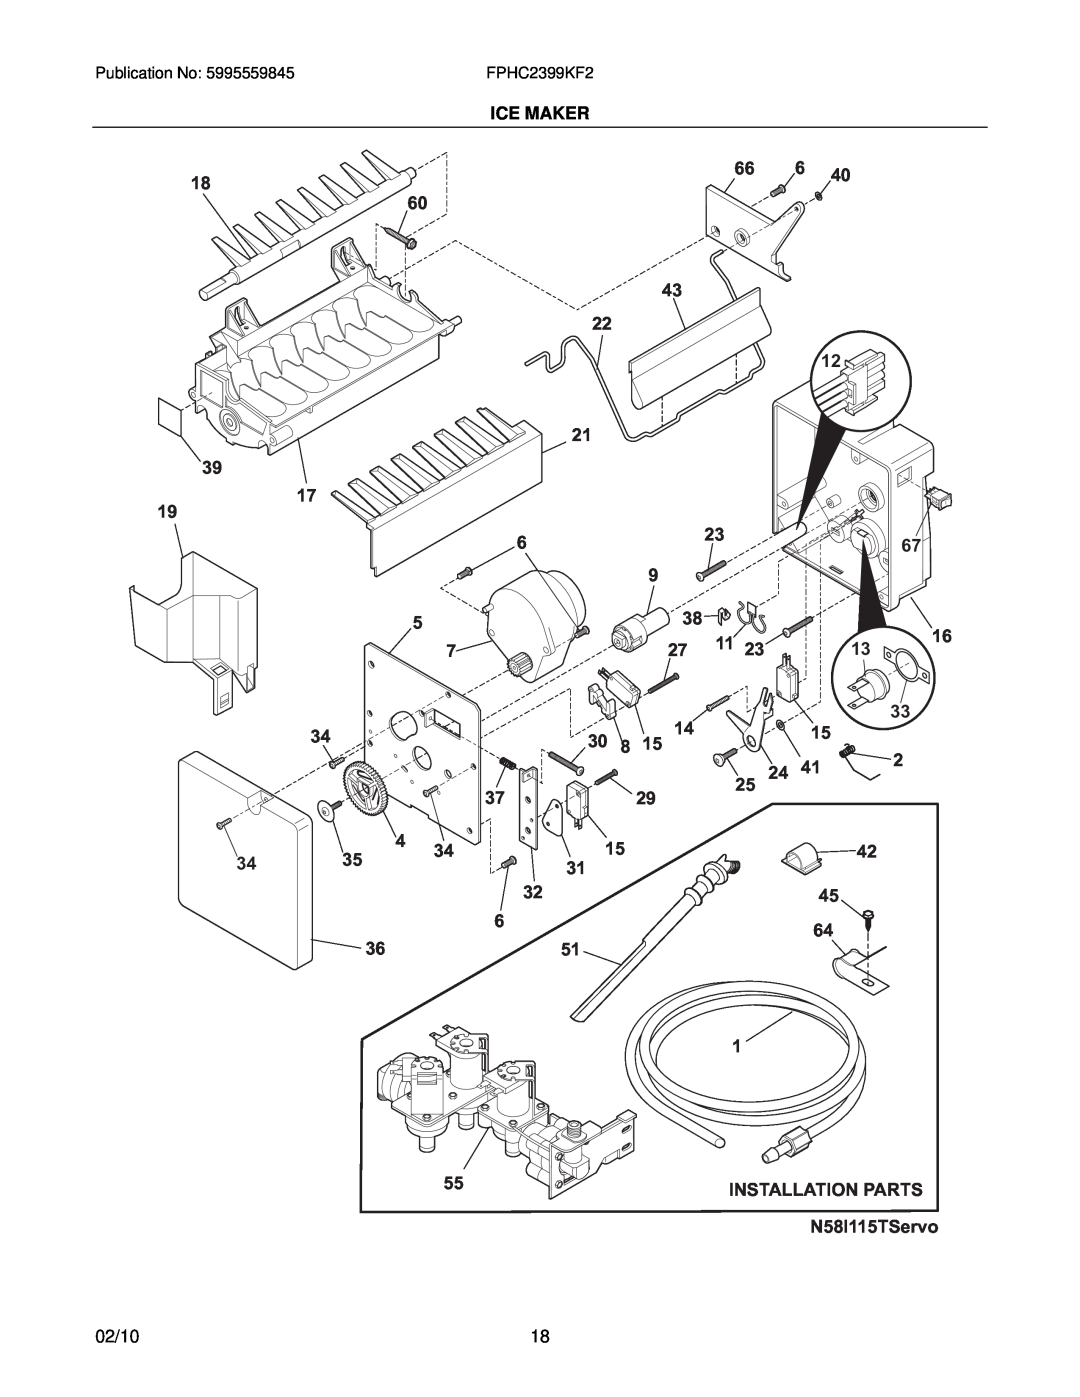 Frigidaire FPHC2339K manual Installation Parts, Ice Maker, N58I115TServo, 02/10 